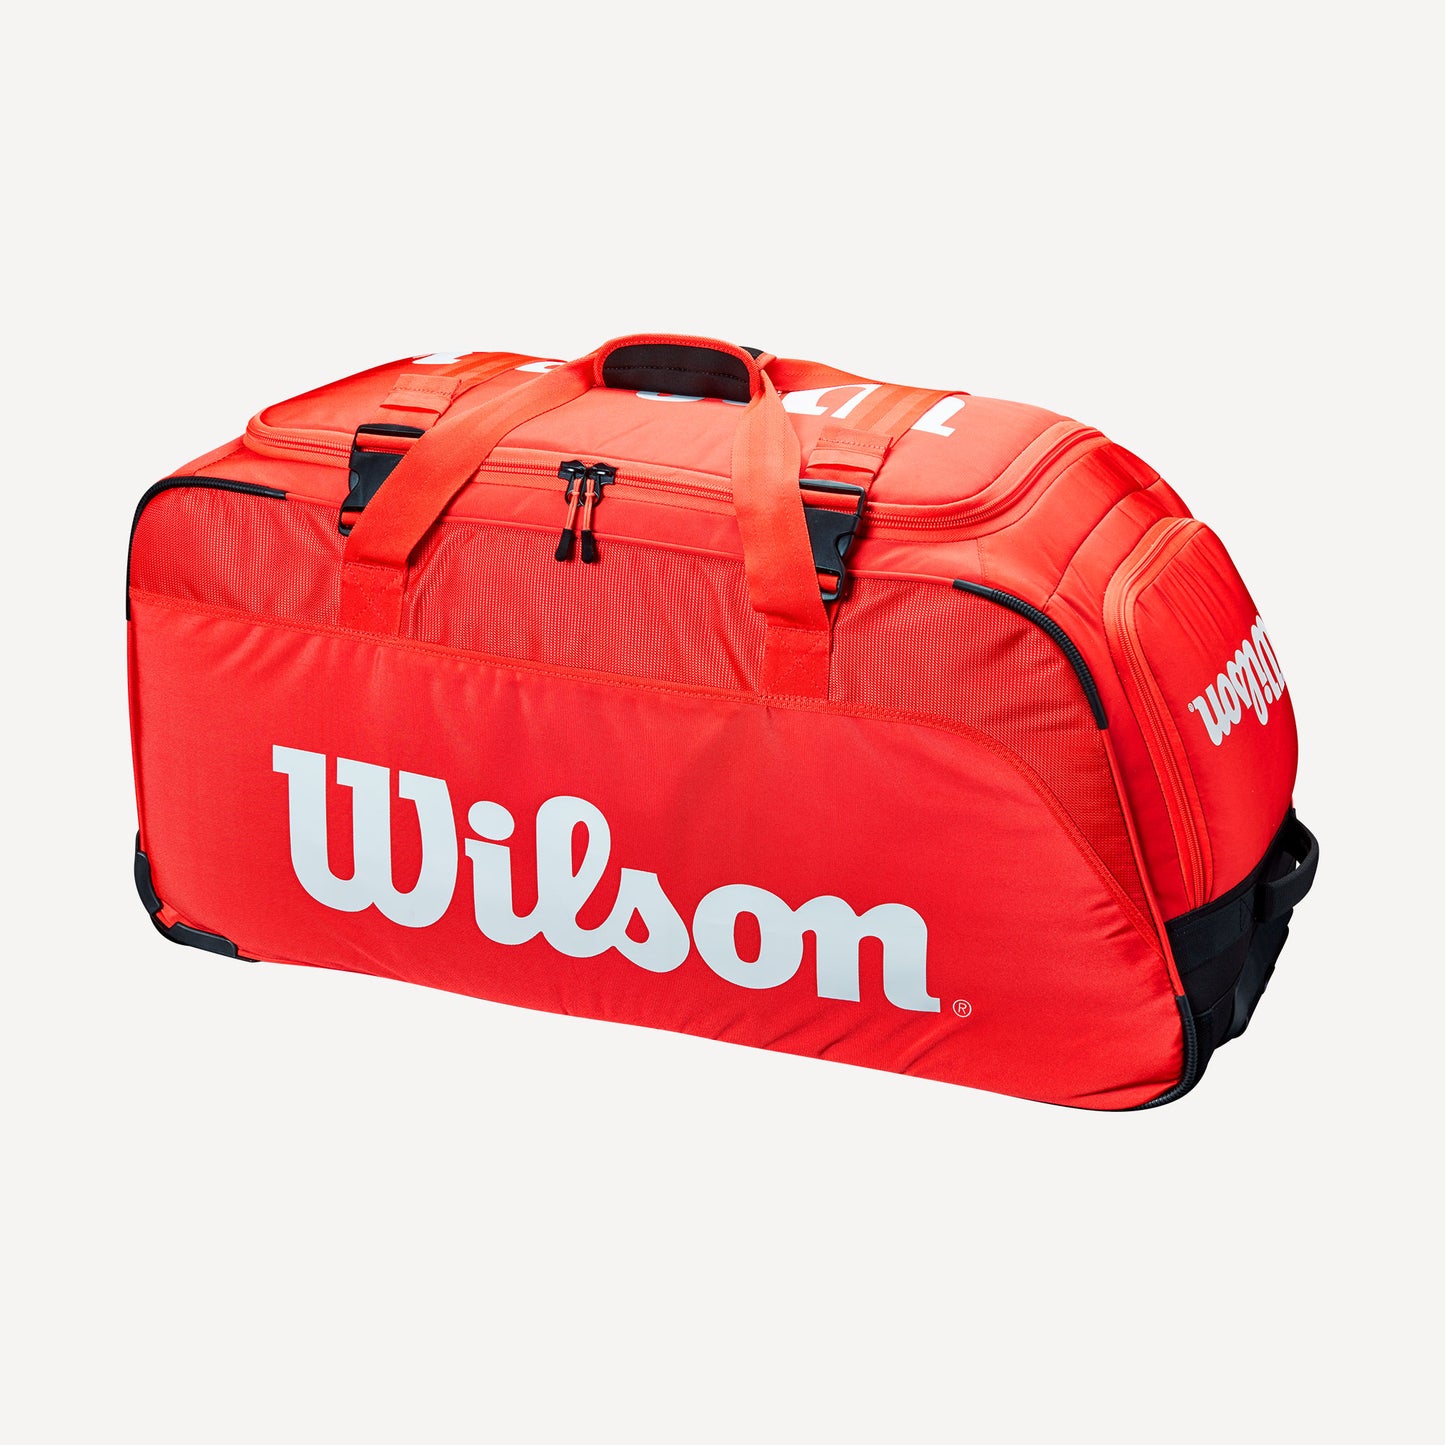 Wilson Super Tour Tennis Travel Bag Red (2)